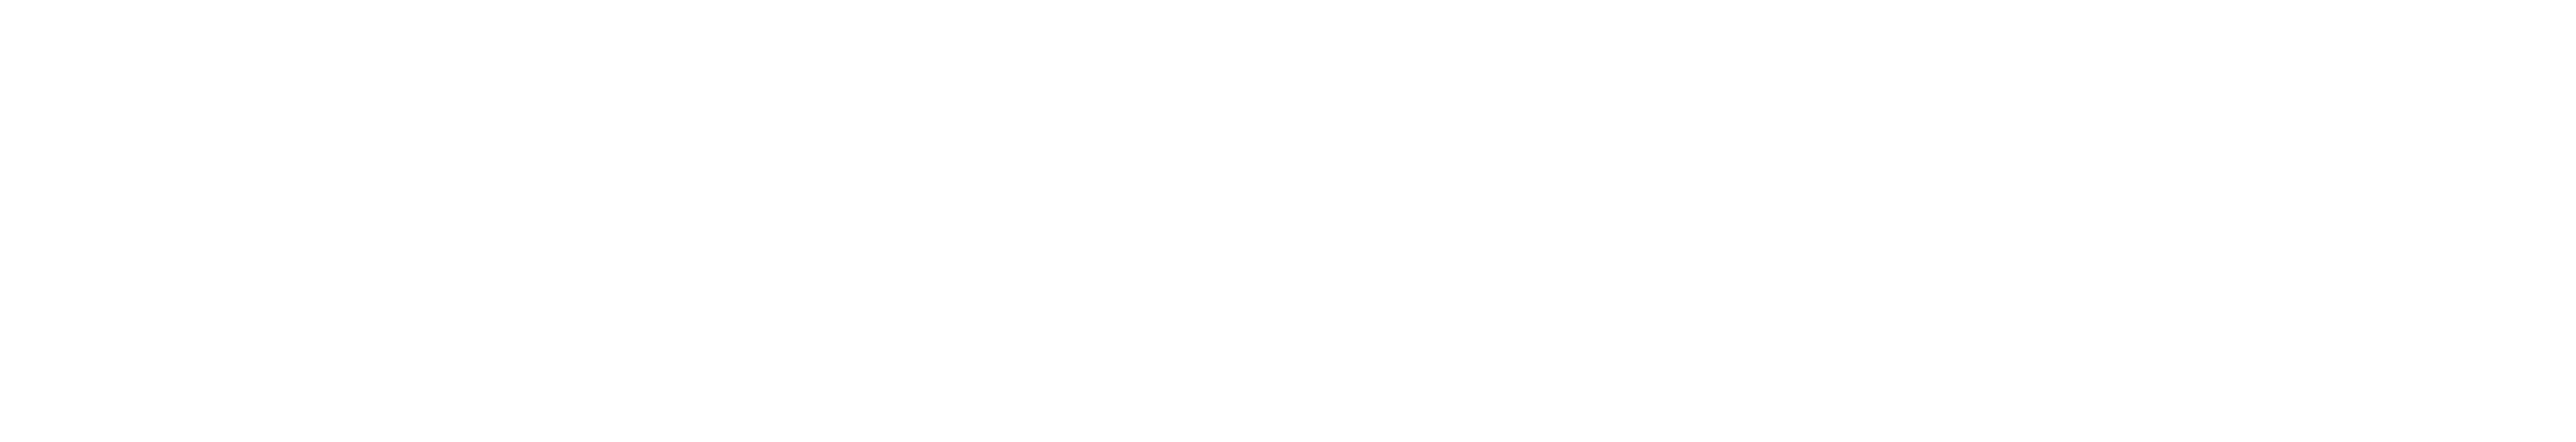 Warragul Community HouseRoom Hire